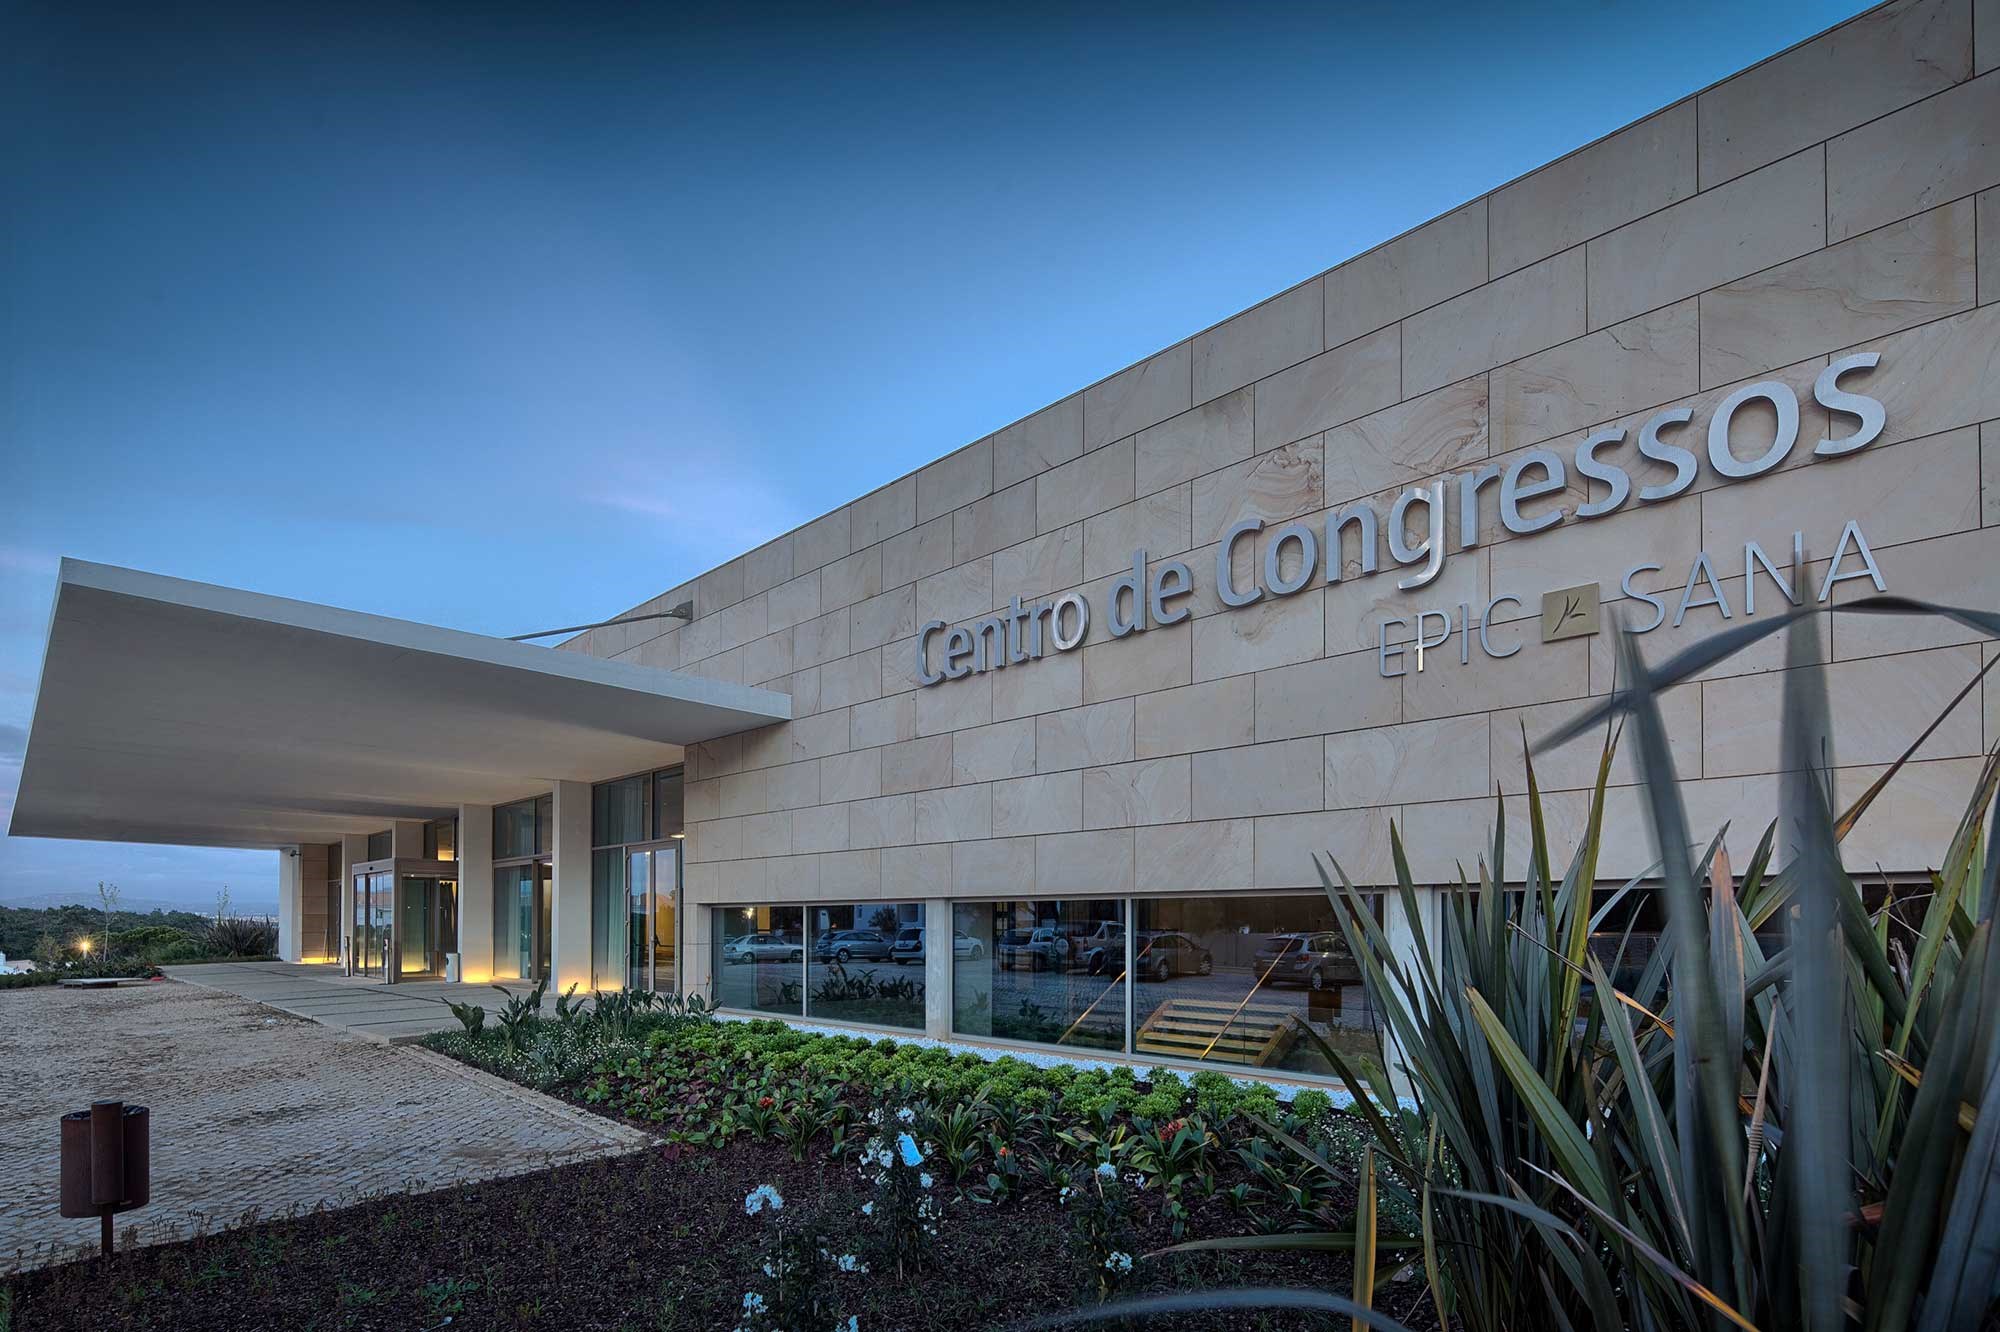 Congress Center